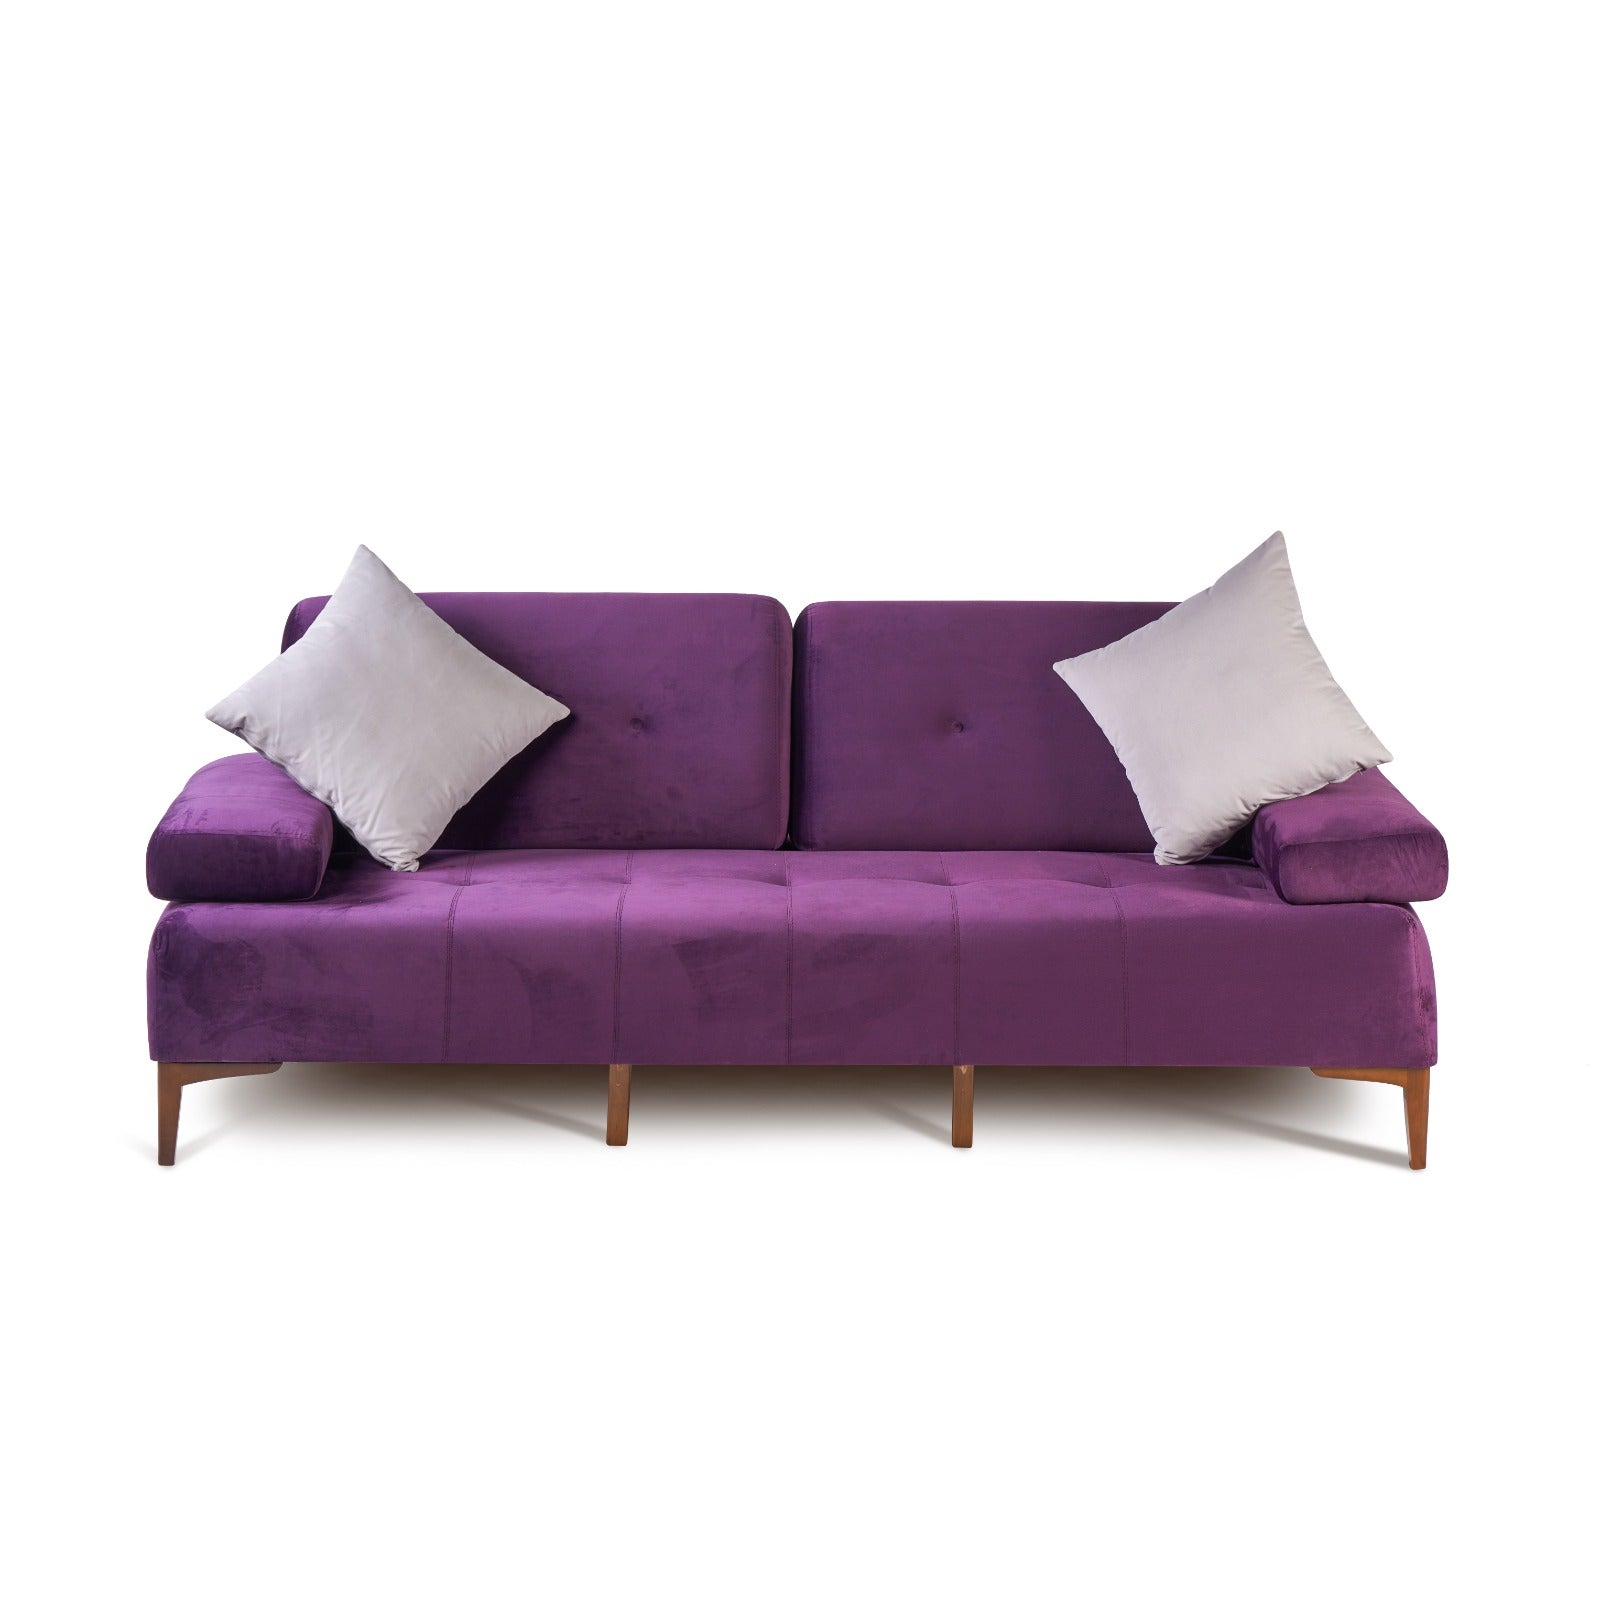 Ronama- Sofa Bed